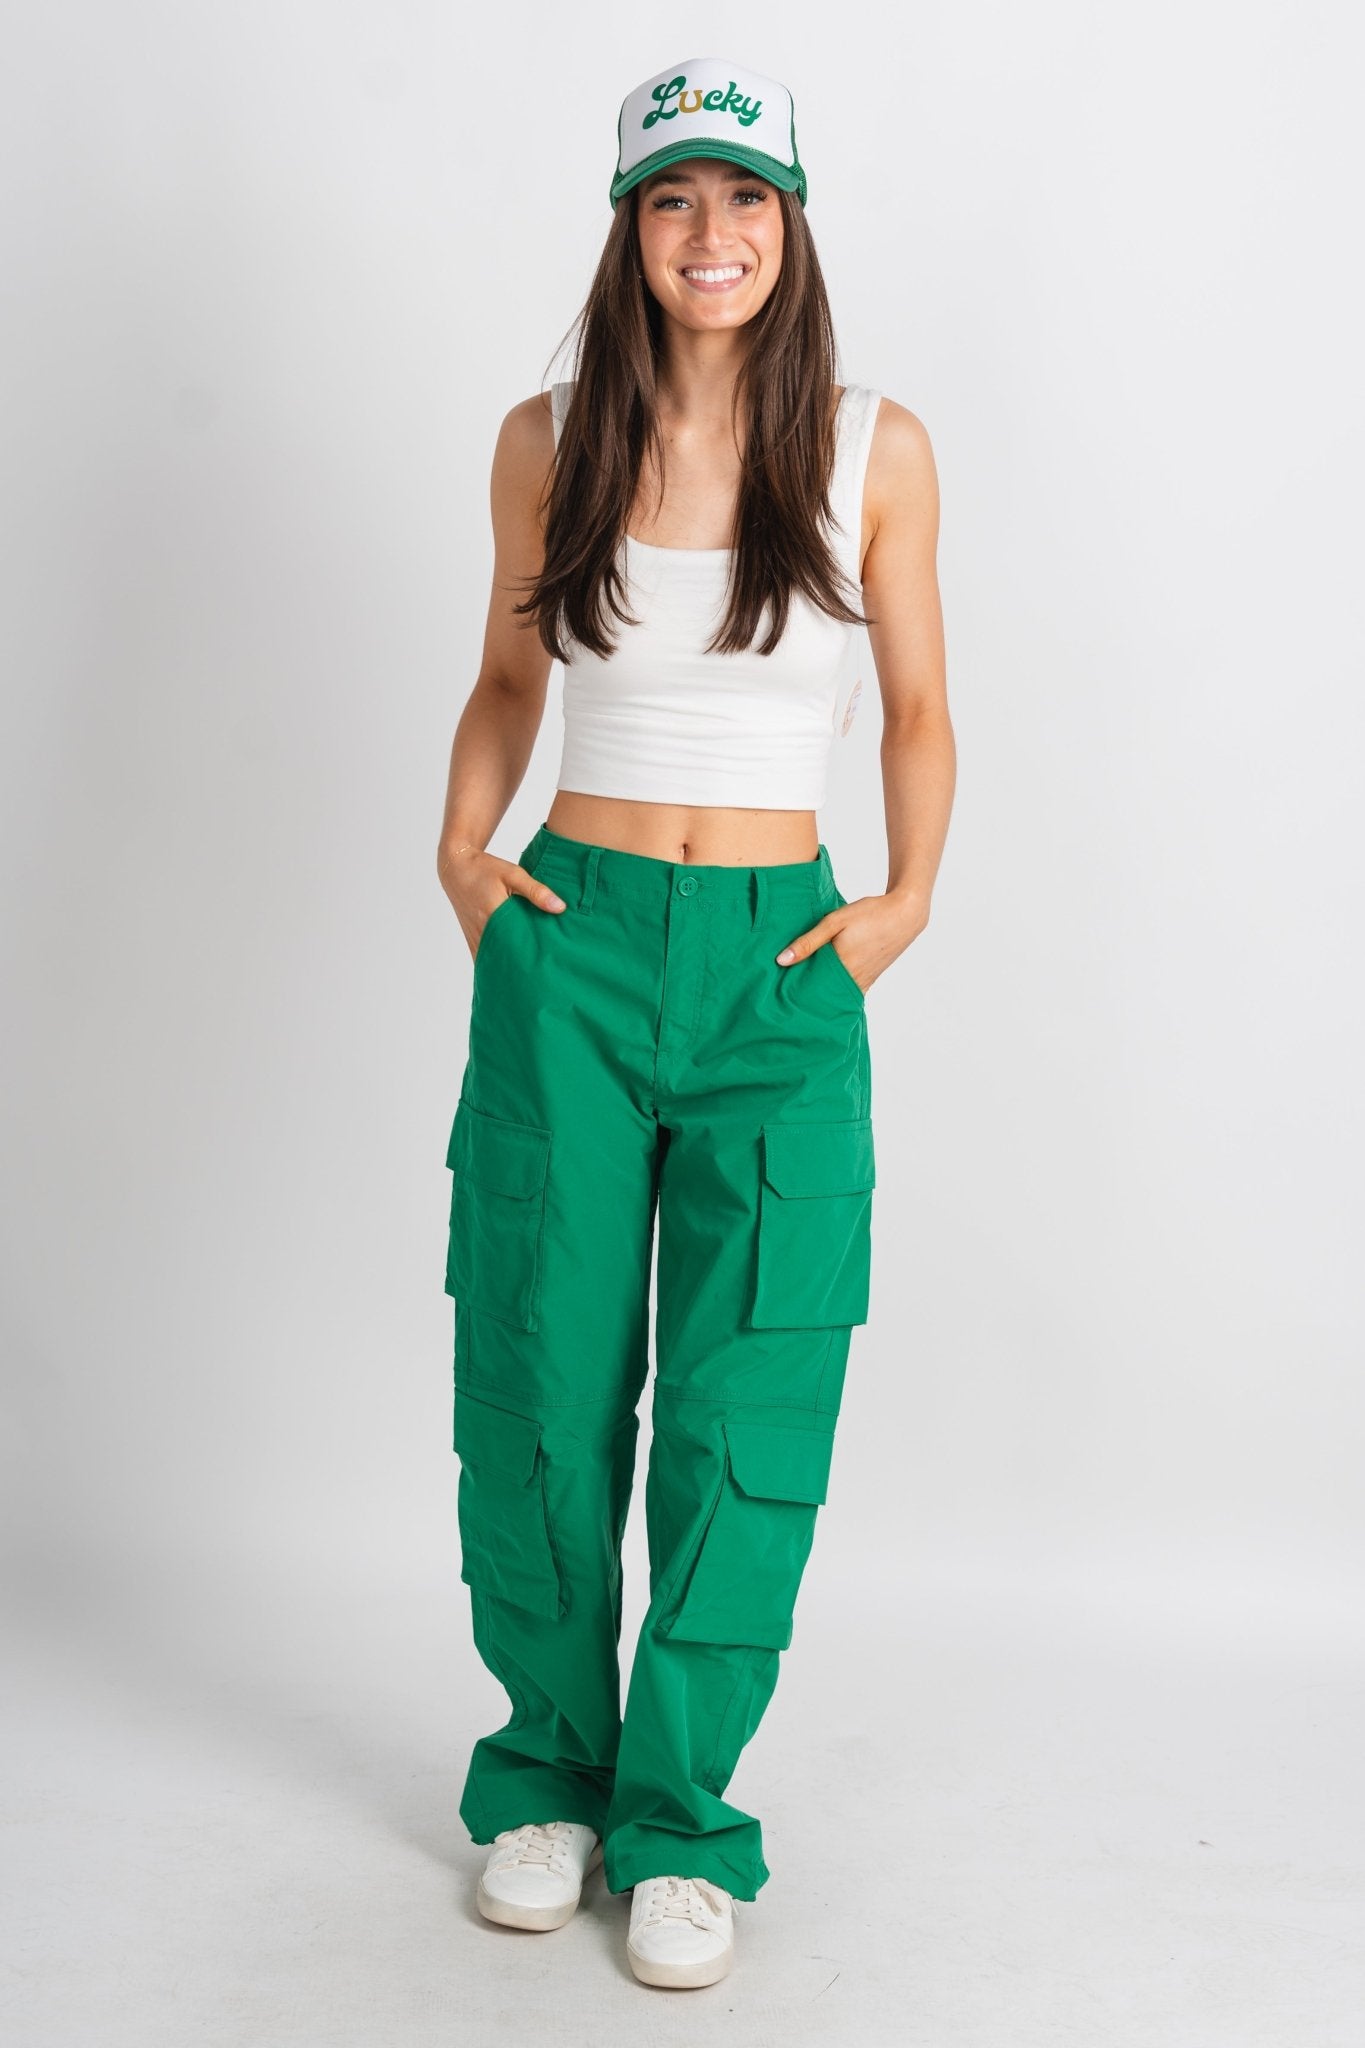 Cargo pocket pants green | Lush Fashion Lounge: women's boutique pants, boutique women's pants, affordable boutique pants, women's fashion pants